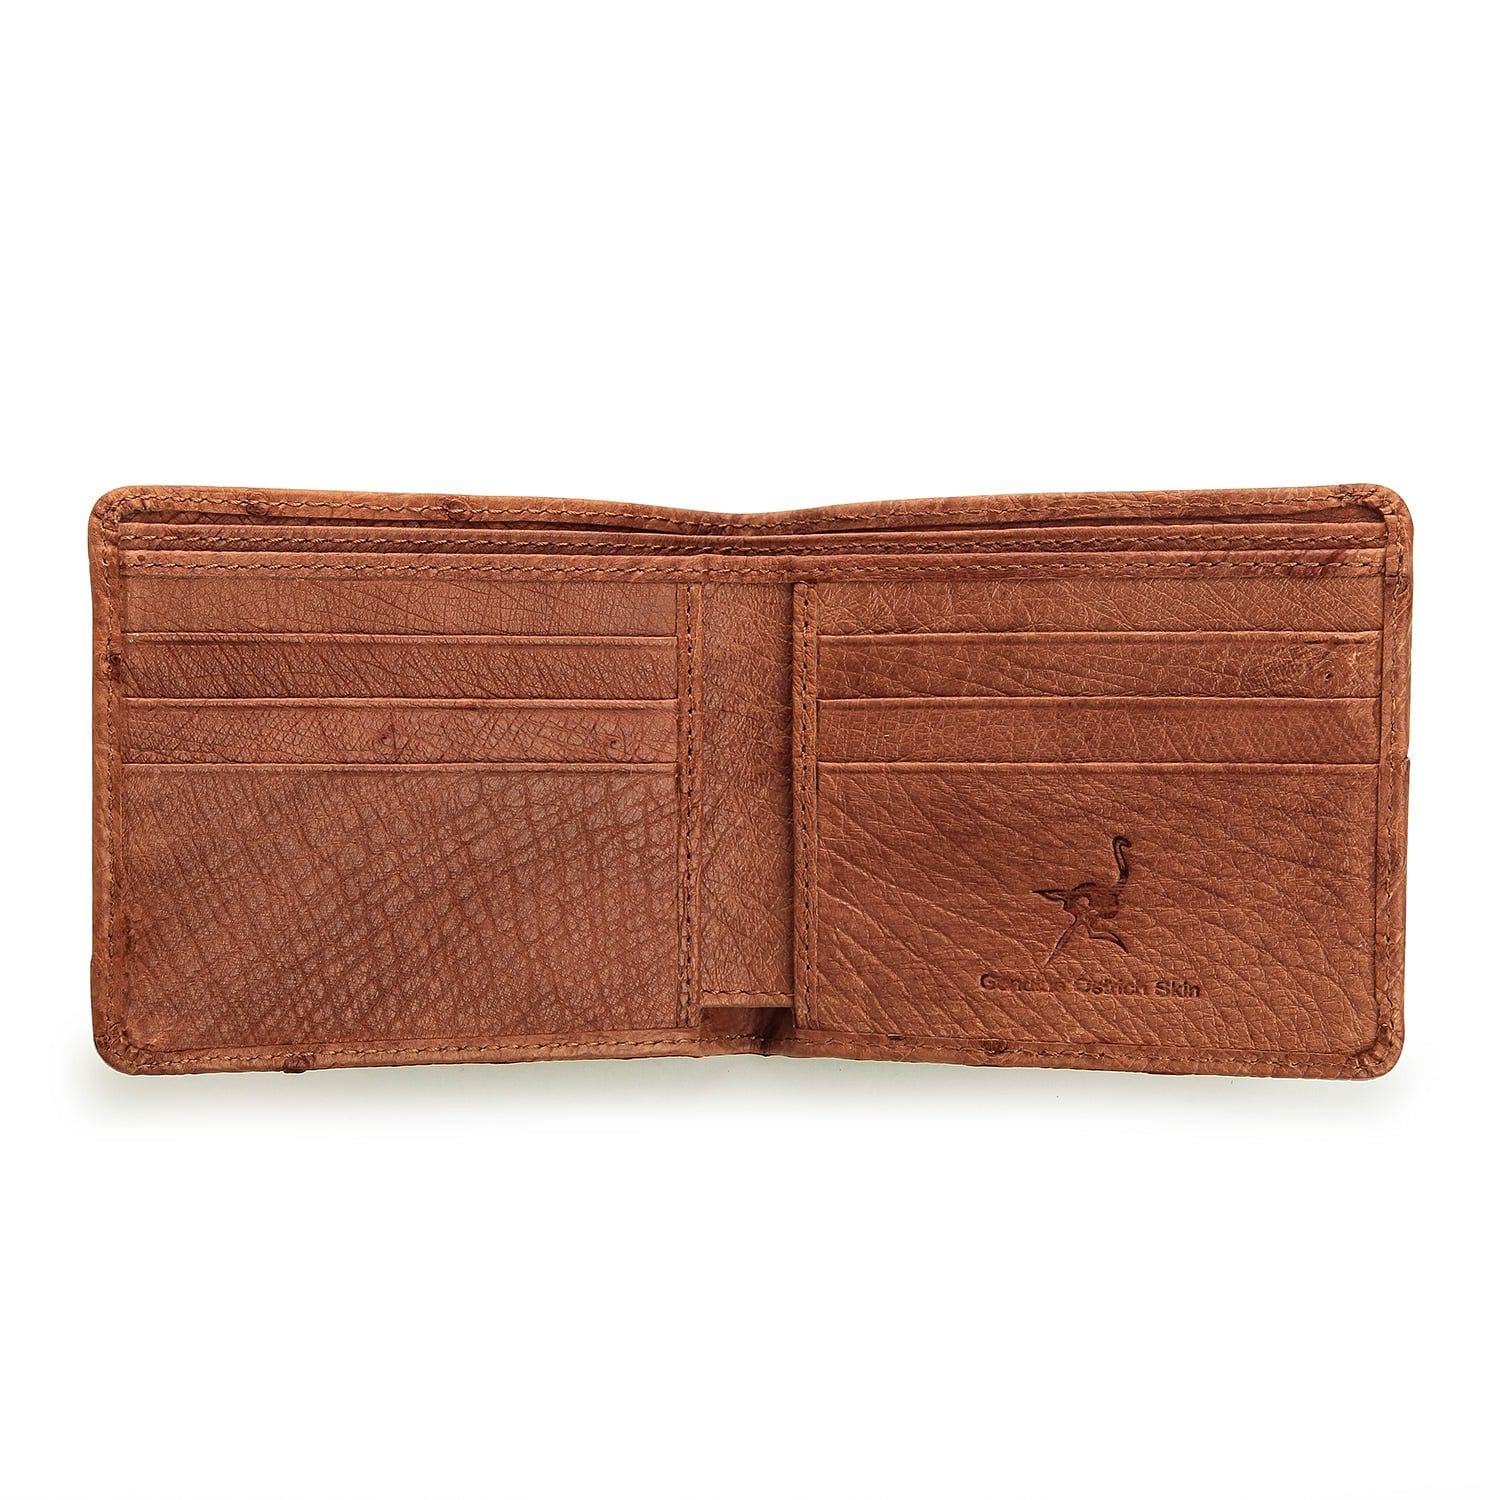 Lining Cognac Brown Genuine Ostrich Skin Leather Wallet